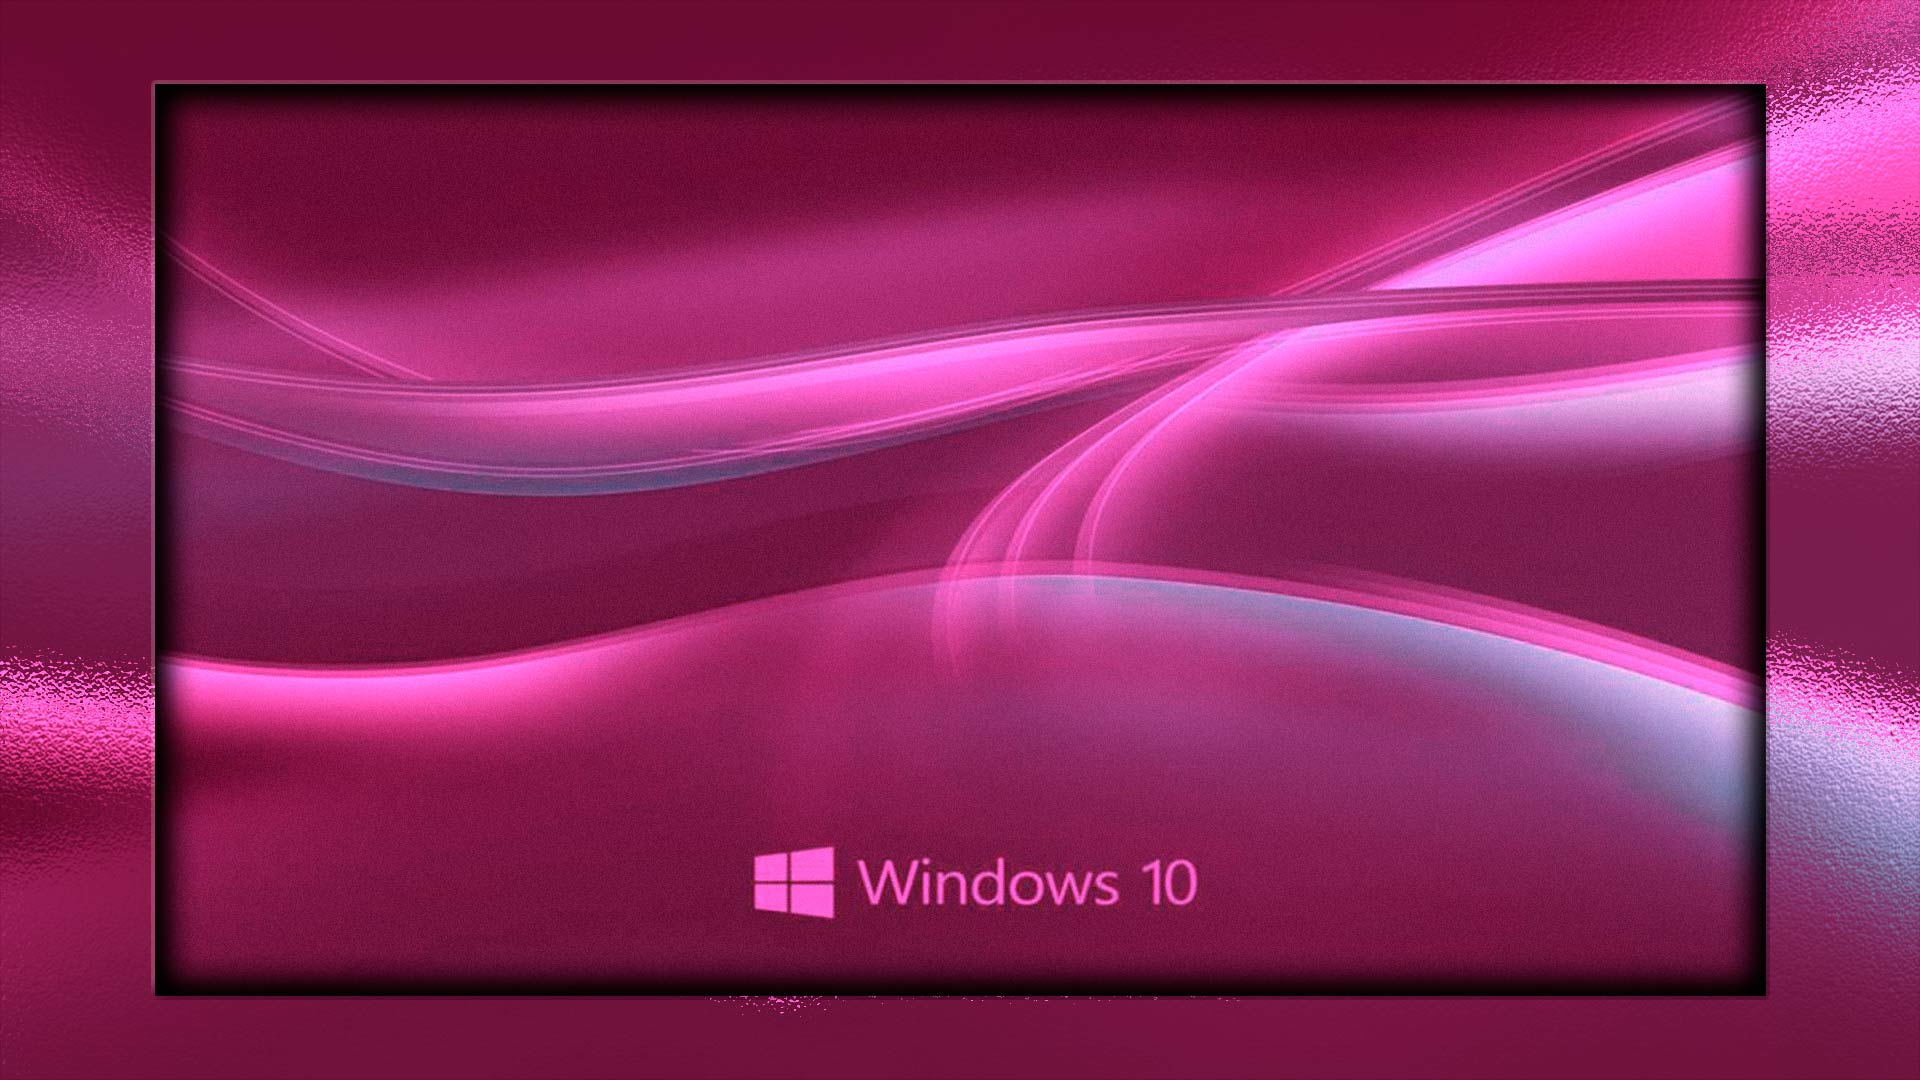 Windows 10 wallpaperWindows 10 imageWindows 10 hd